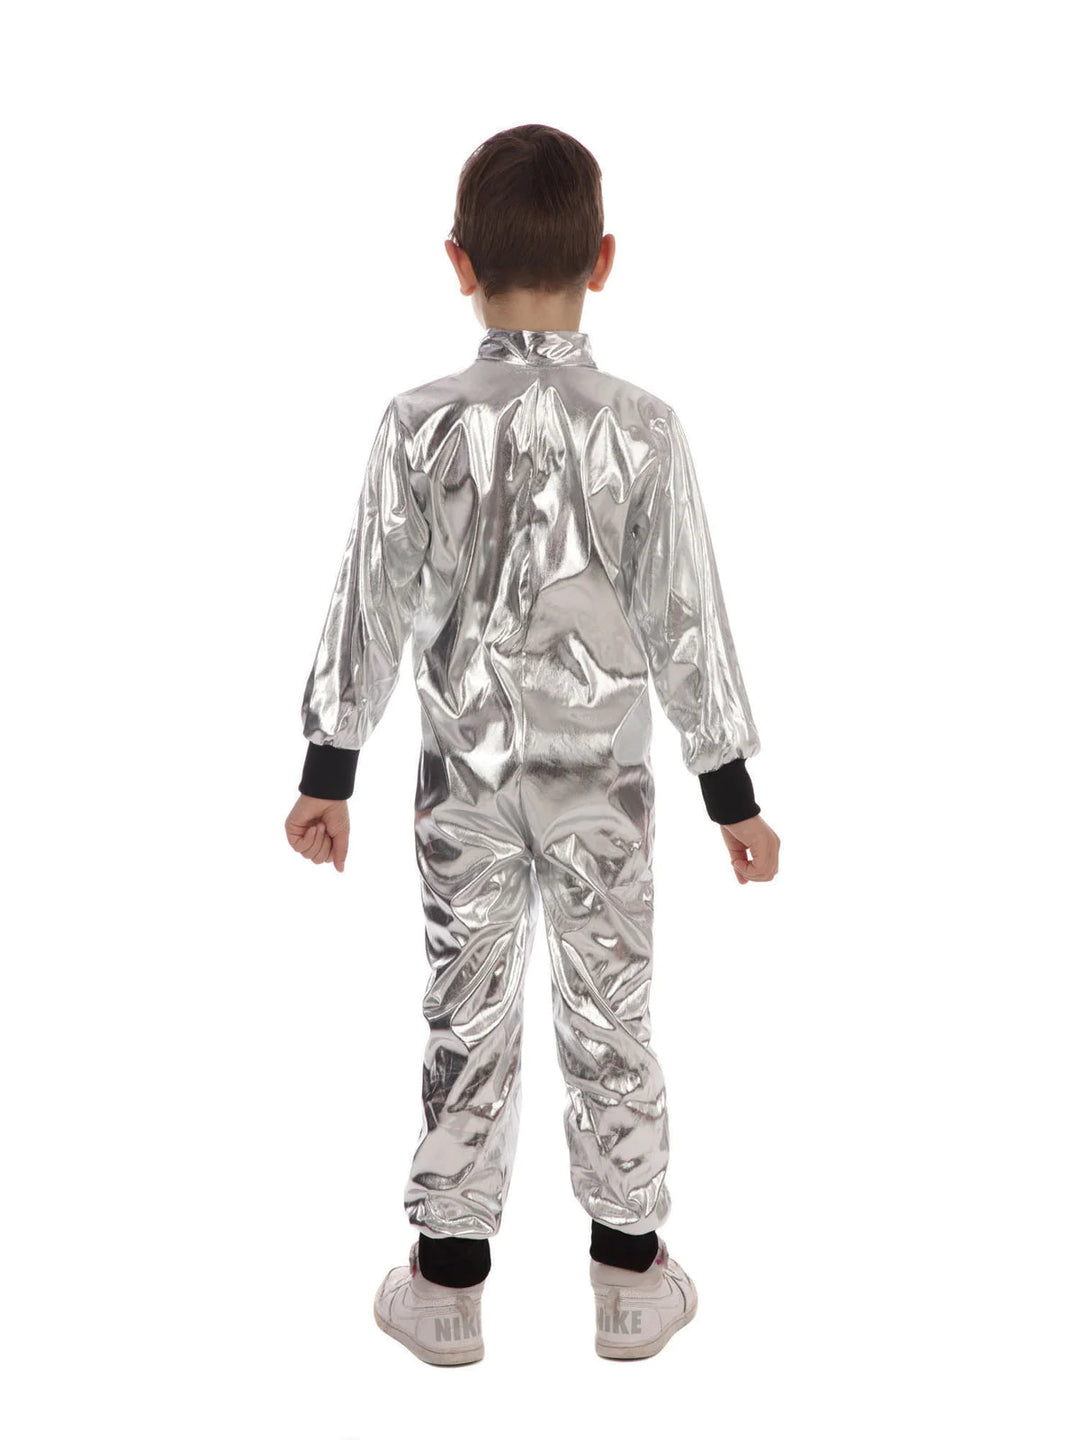 Astronaut Costume Boys Shiny Silver Space Suit